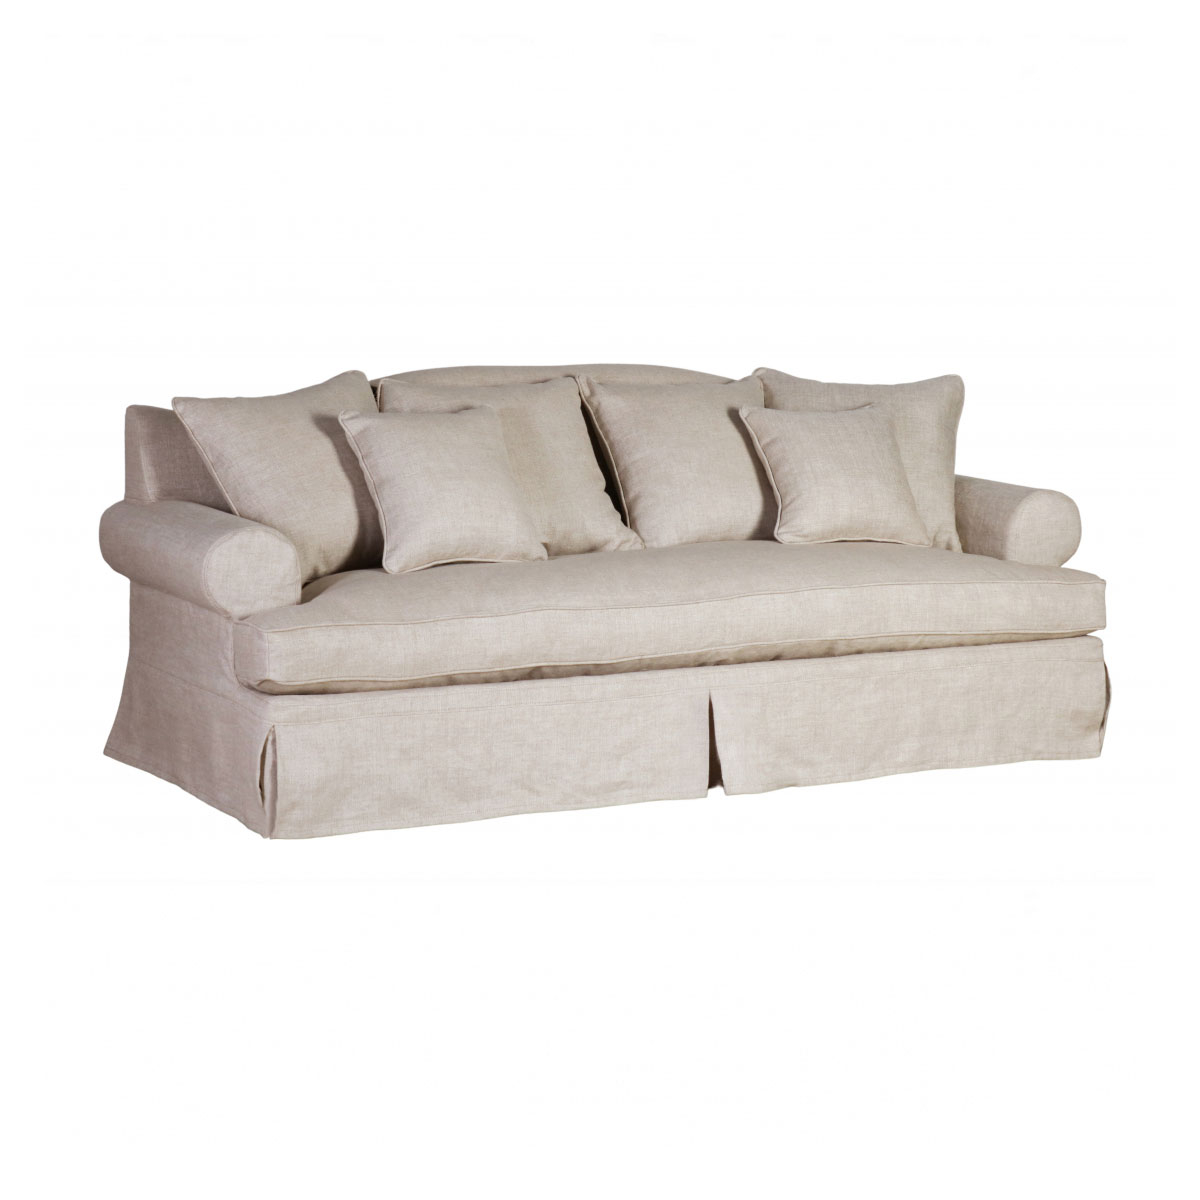 3 seater Belinda sofa in linen slipcover